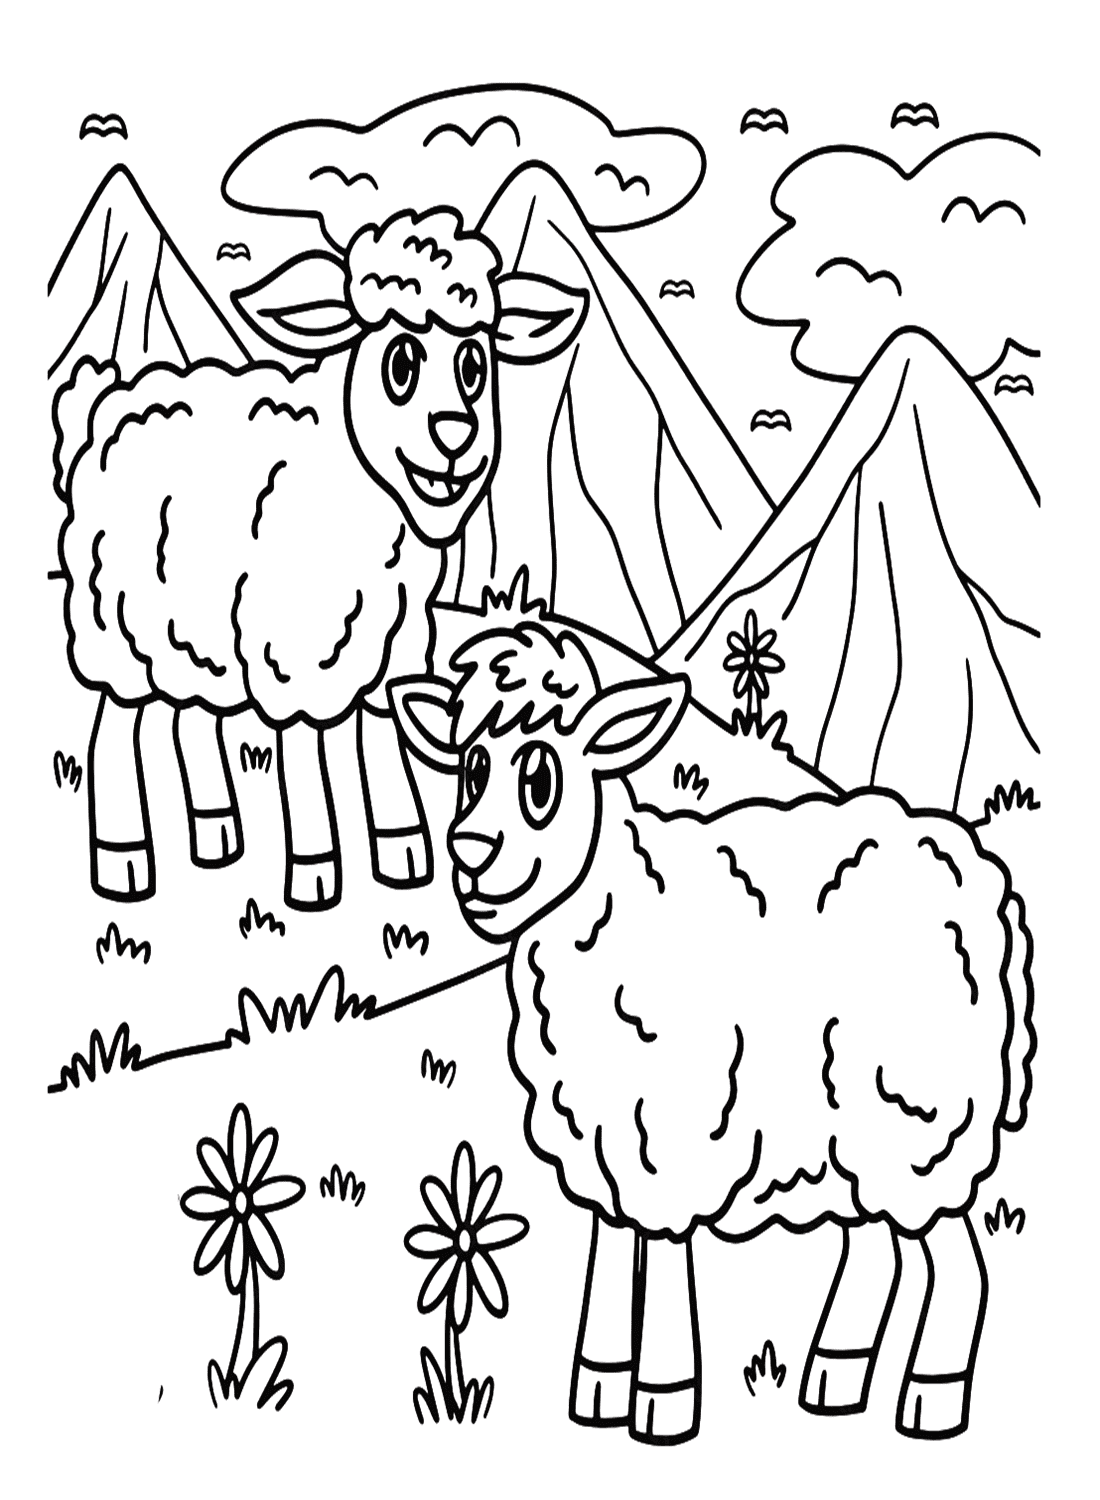 Lamb 为孩子们准备的两只可爱的小羊羔